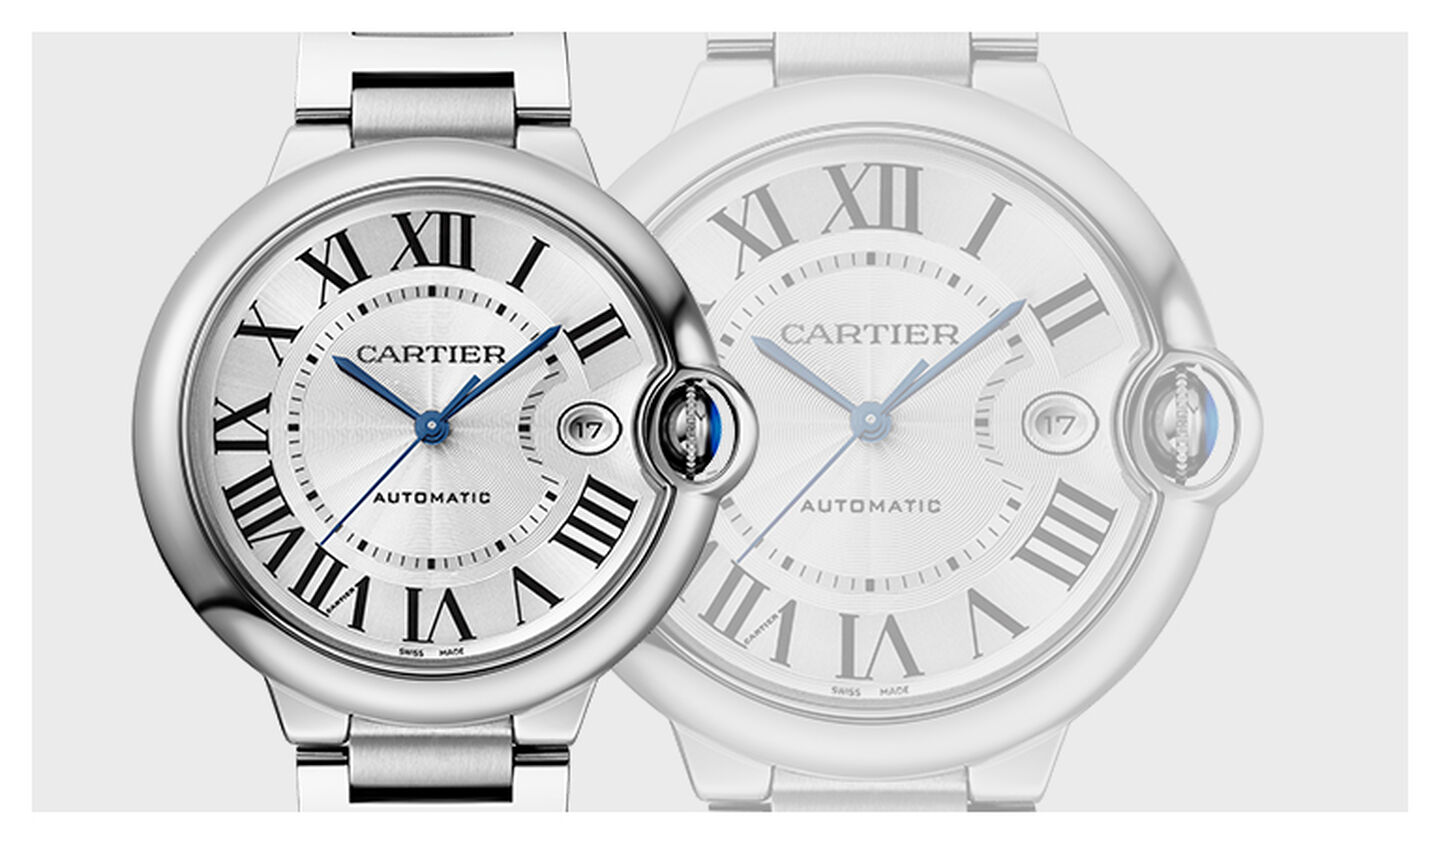 Ballon Bleu de Cartier watch on a grey background.